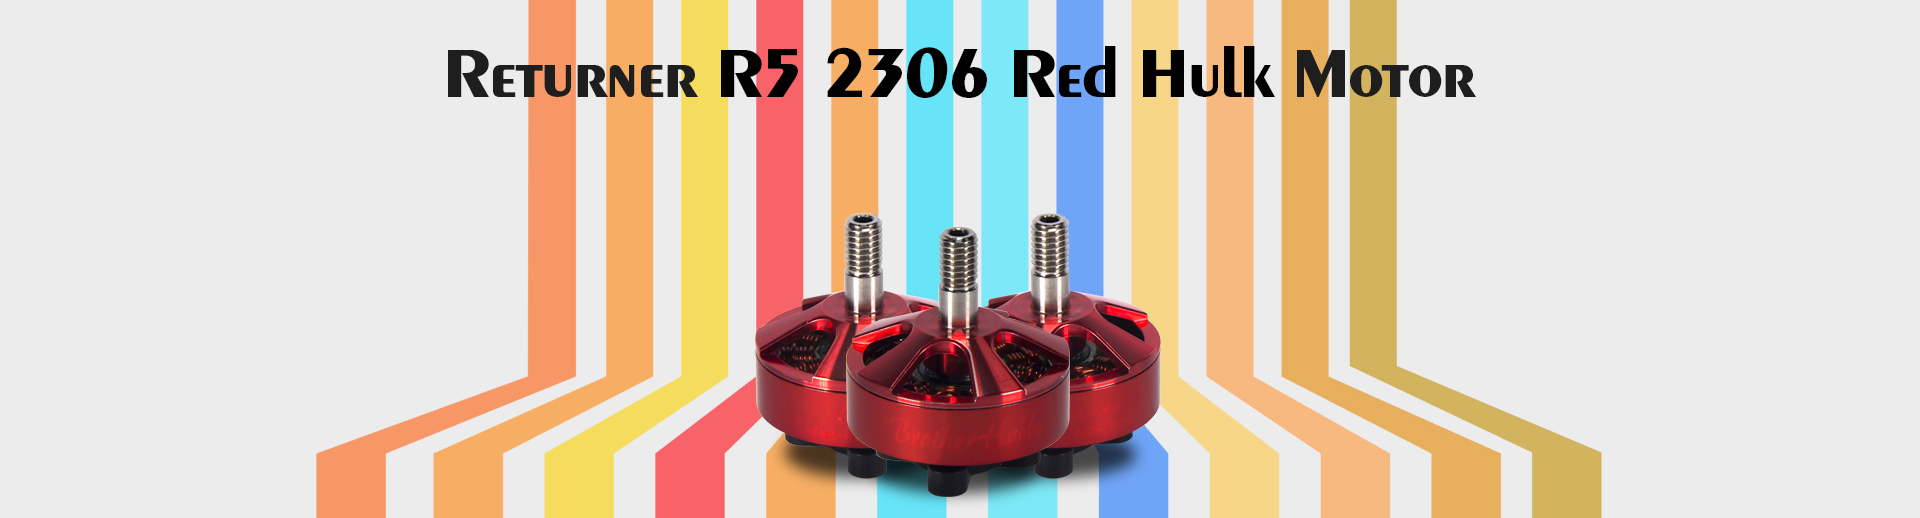 Returner R5 2306 Motor RedHulk